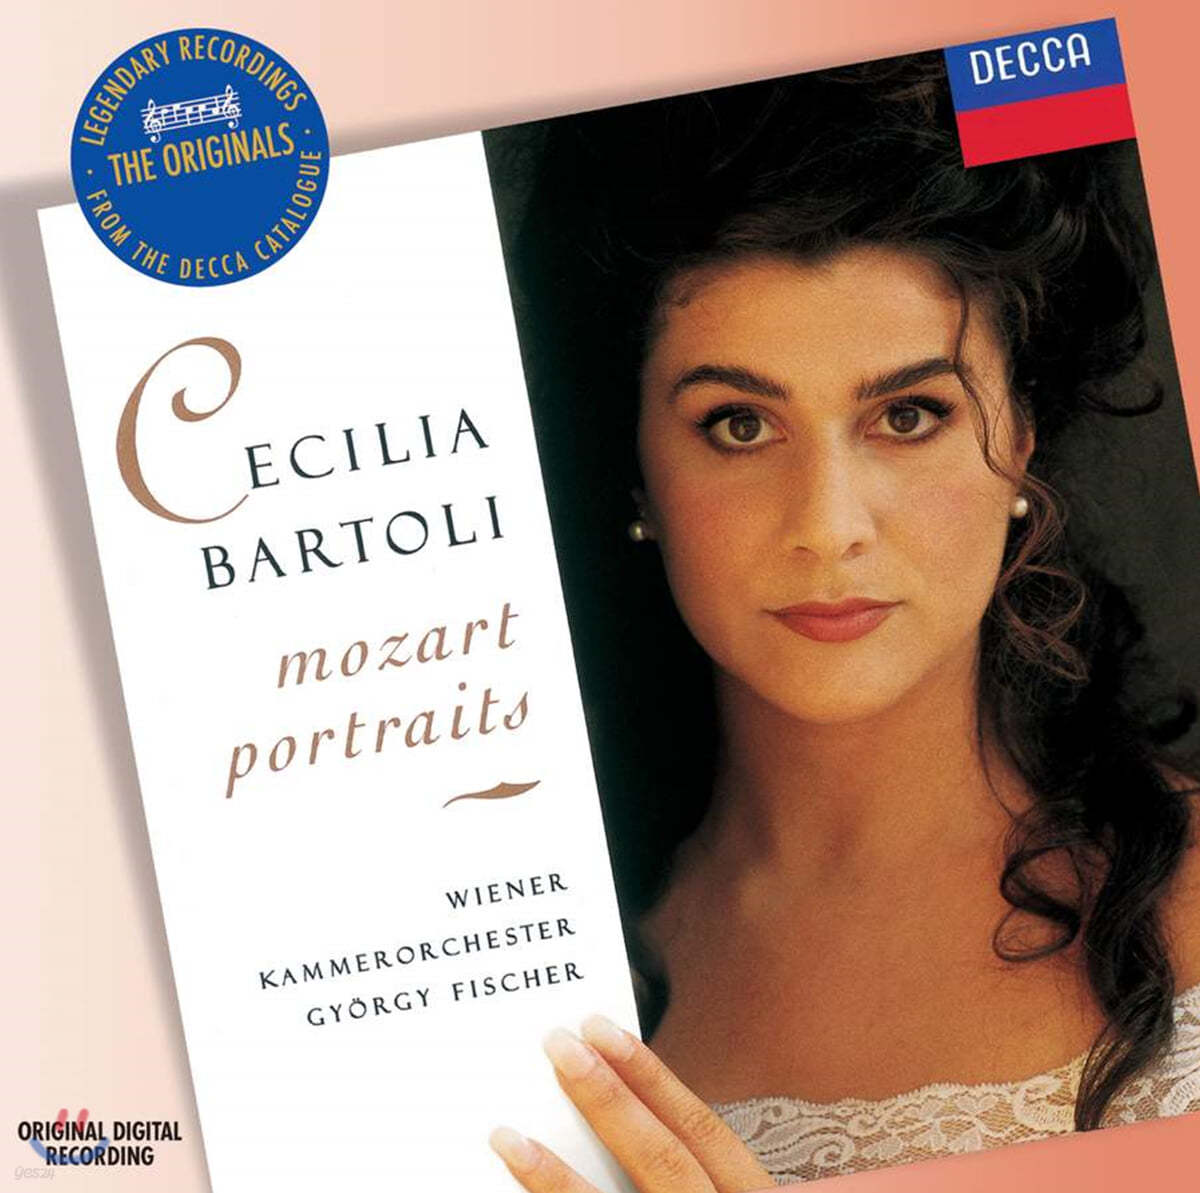 Cecilia Bartoli 모차르트: 포트레이트 (Mozart: Portraits)